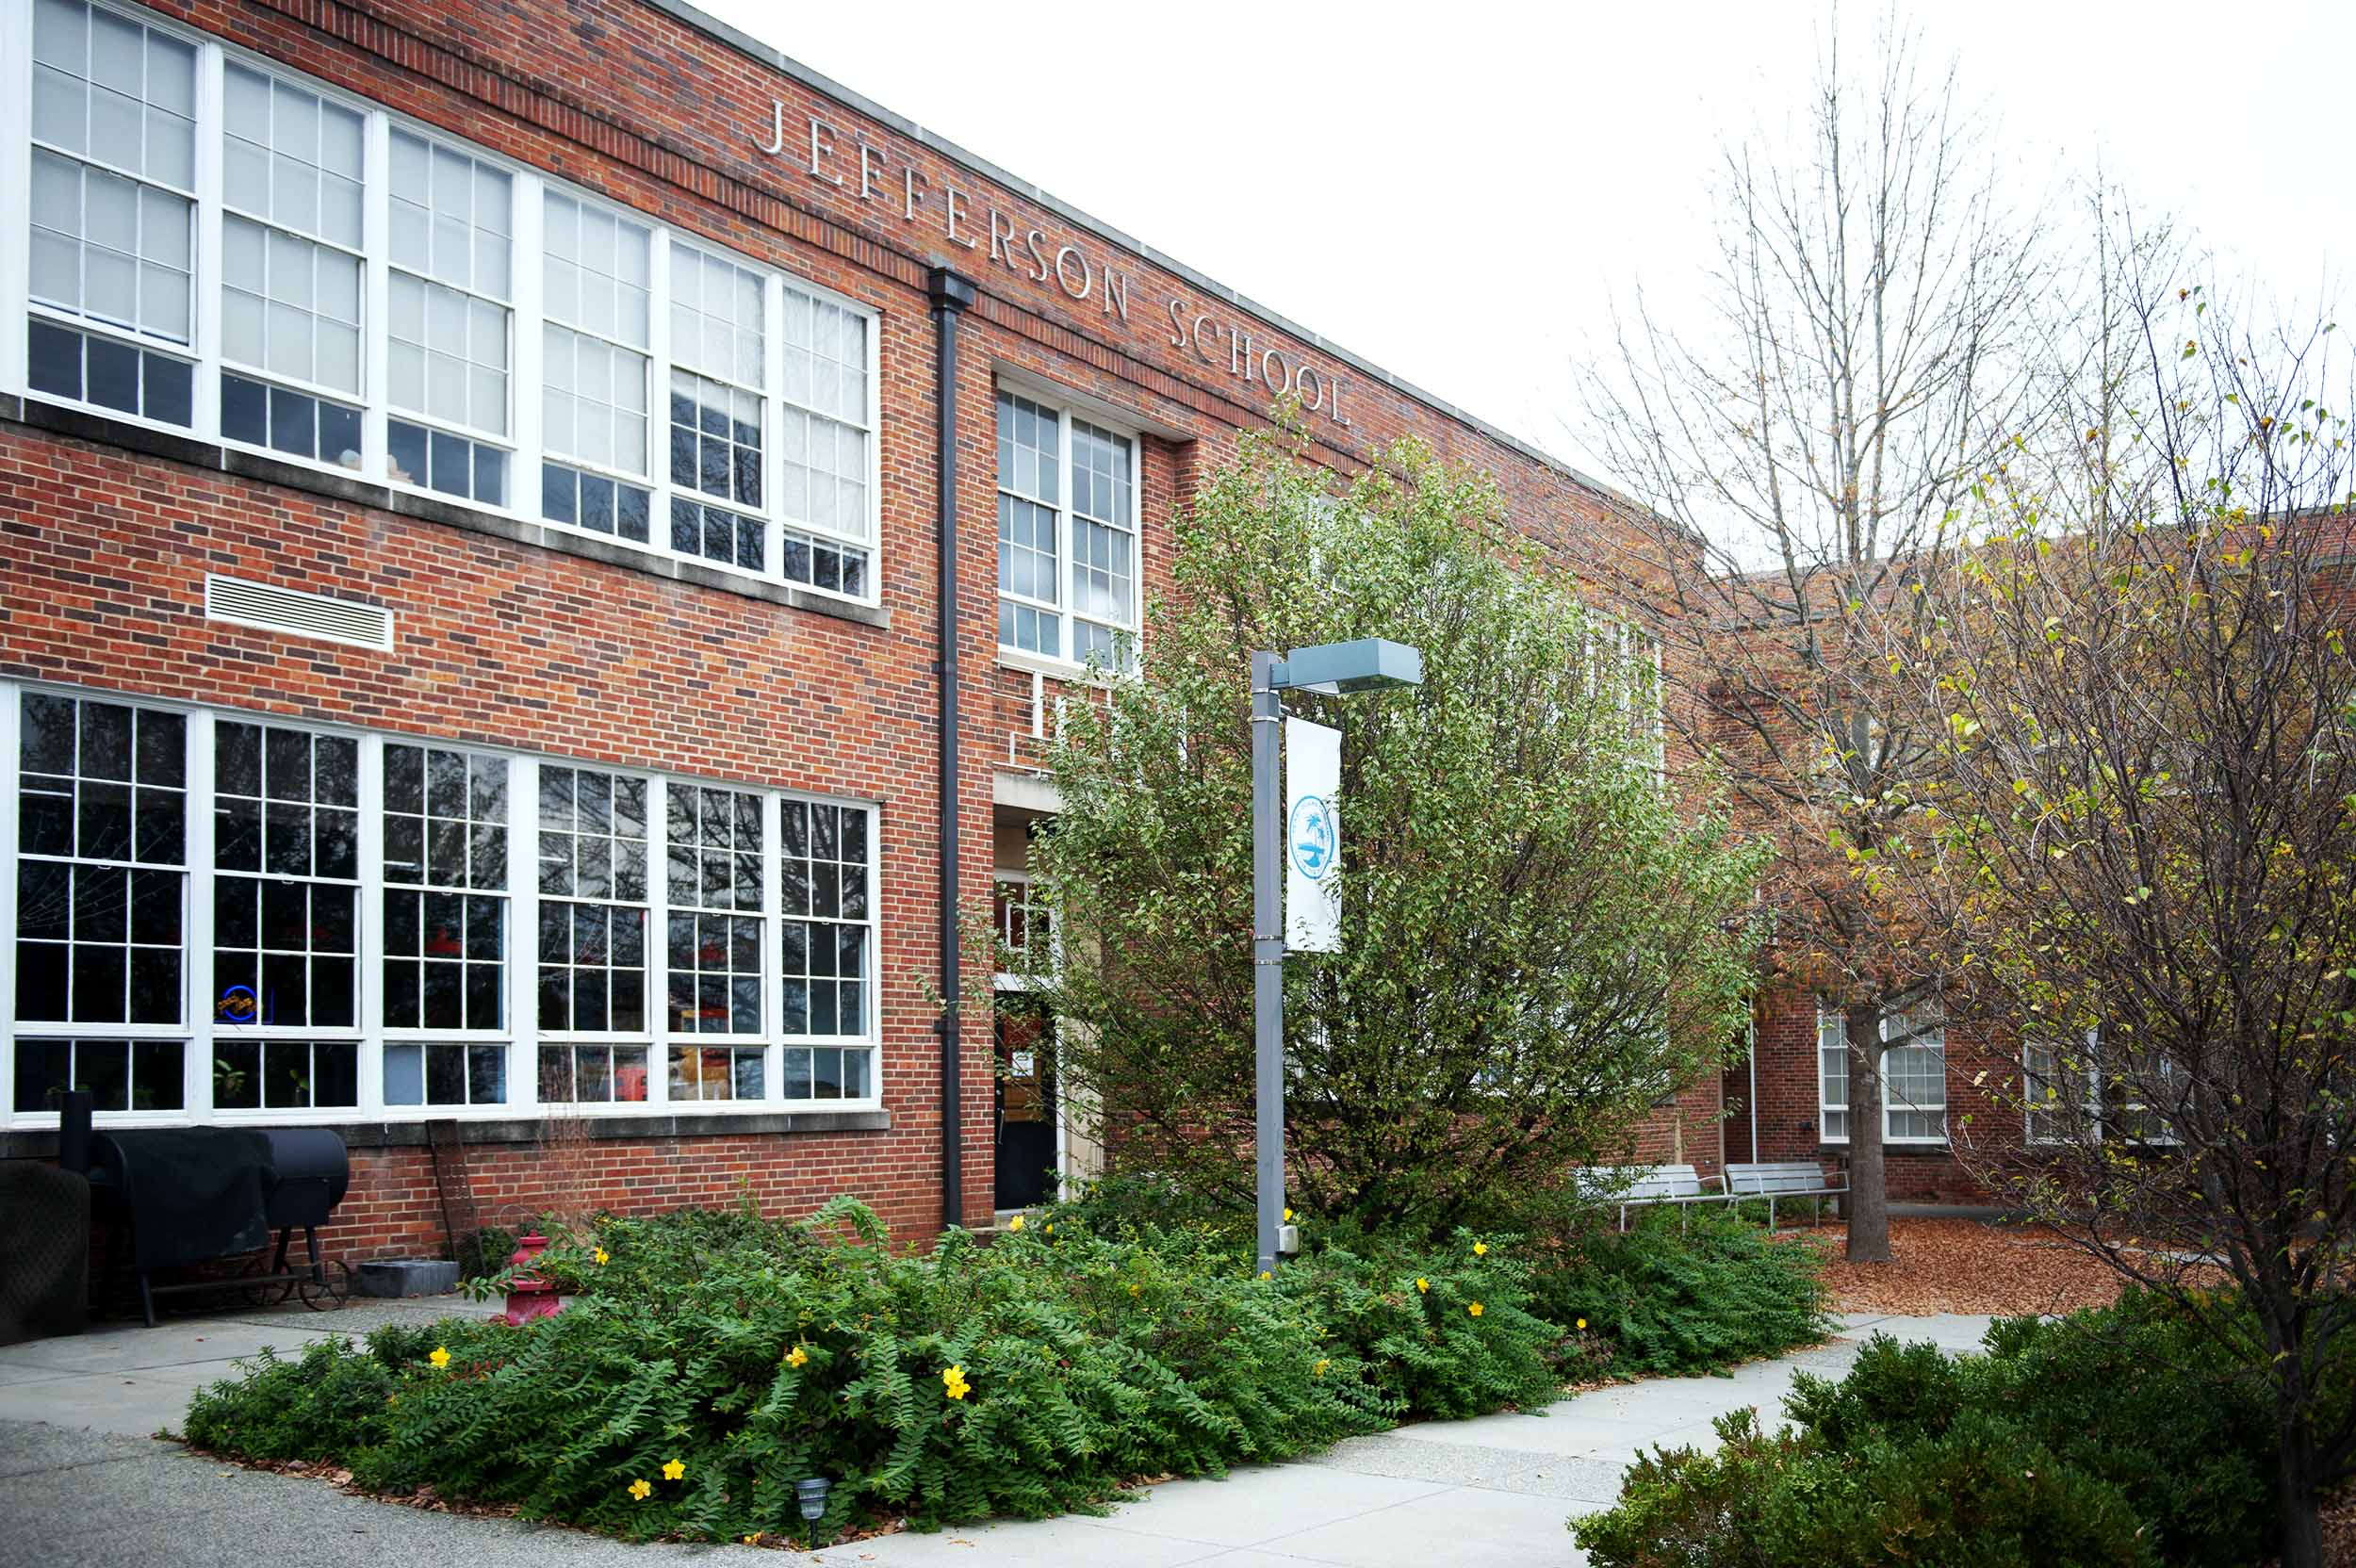 Outside view of the brick Jefferson School